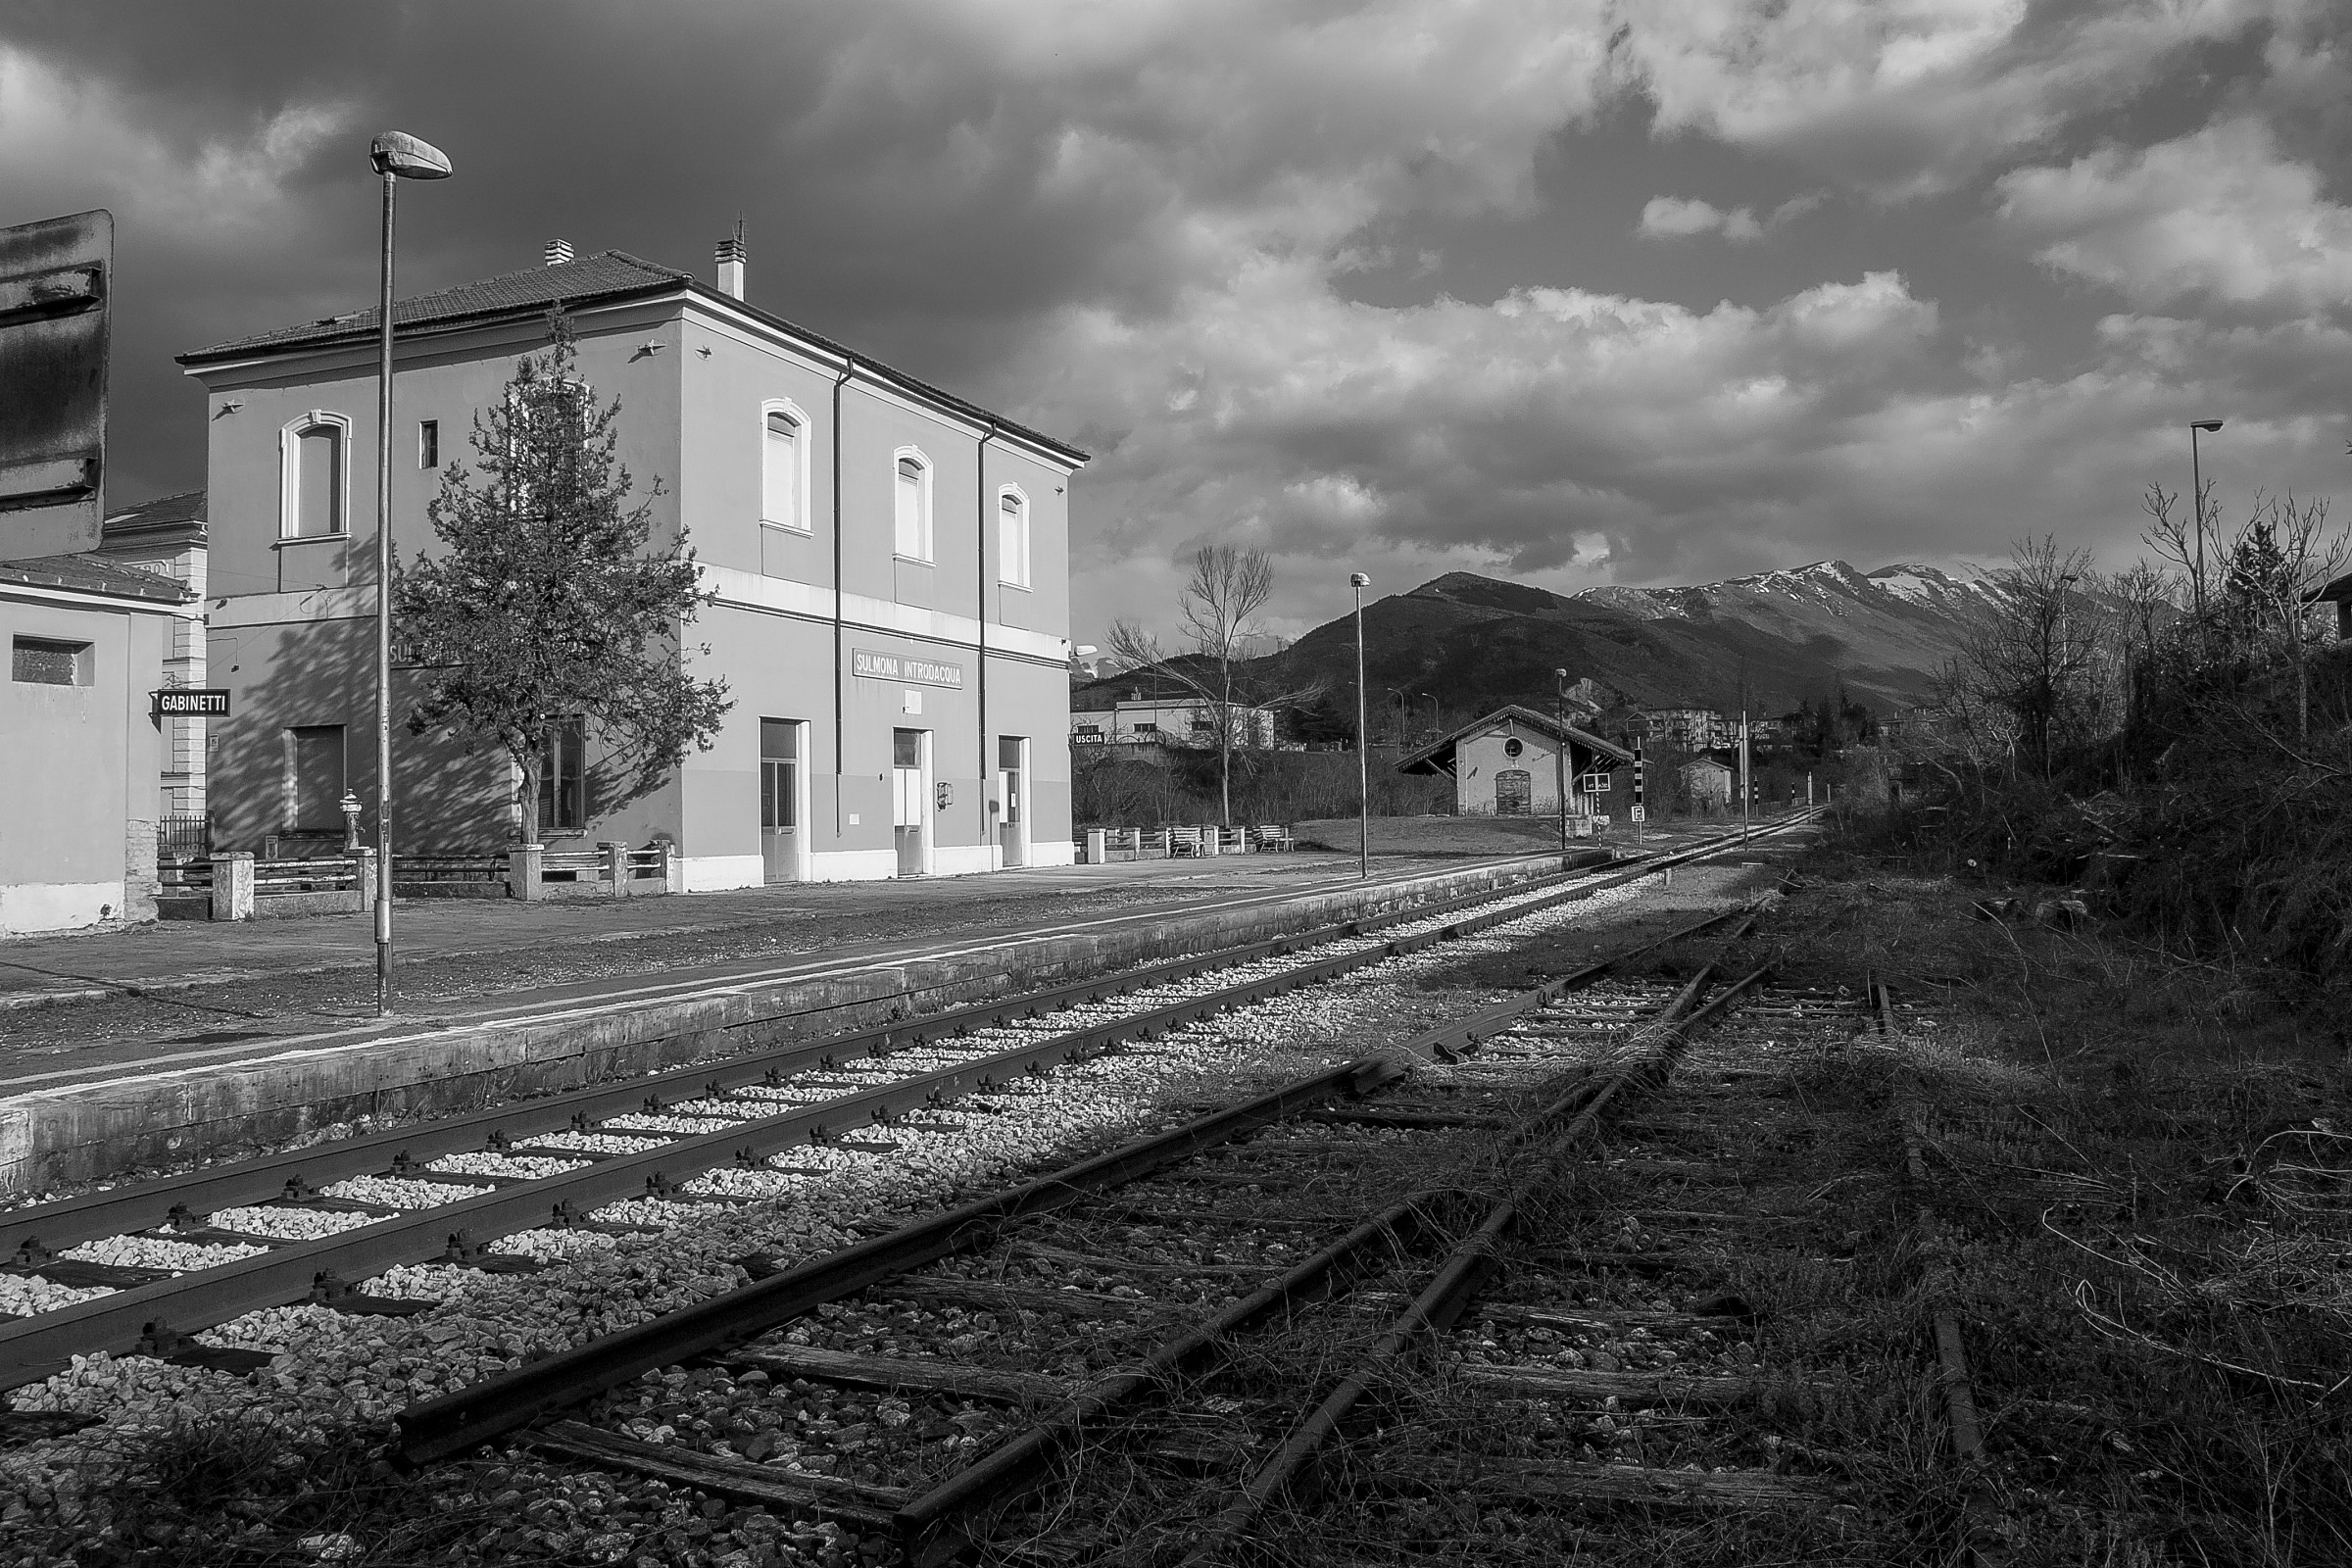 On the Trans-Siberian Italy: Station Sulmona / Introdacqua...